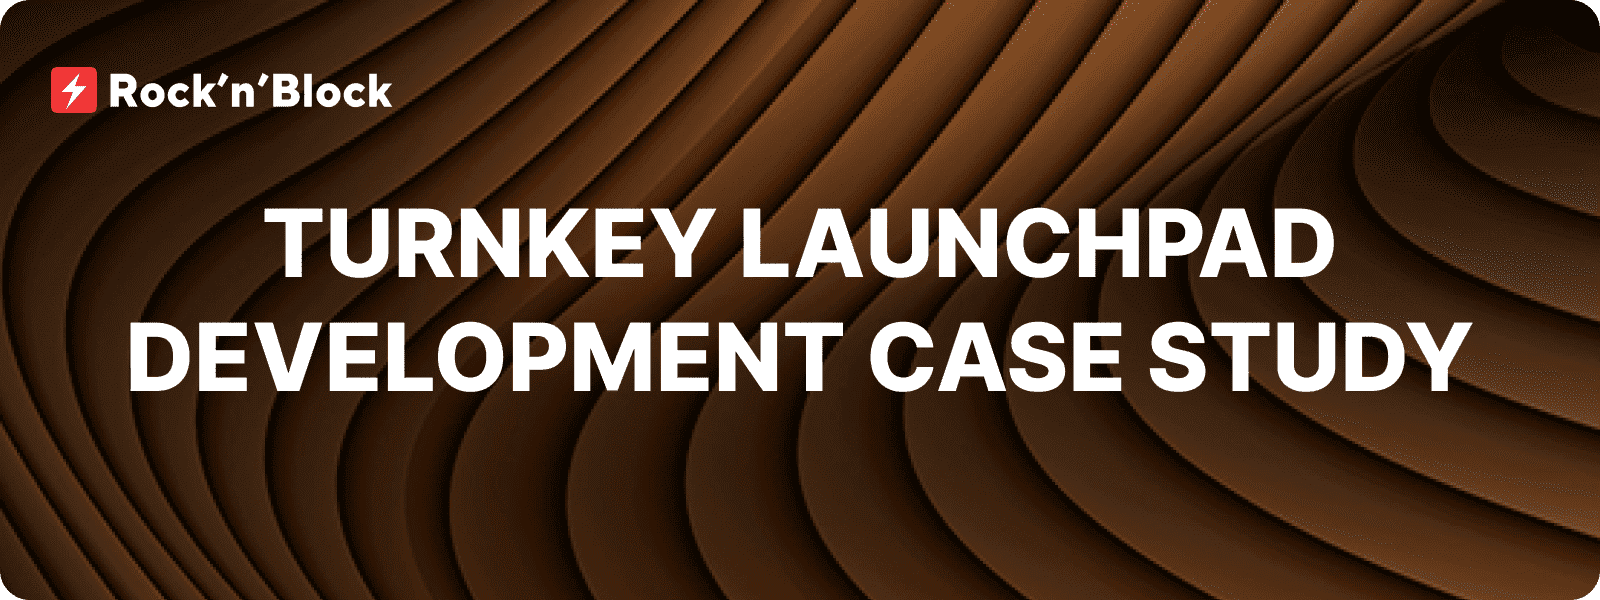 Turnkey Launchpad Development Case Study